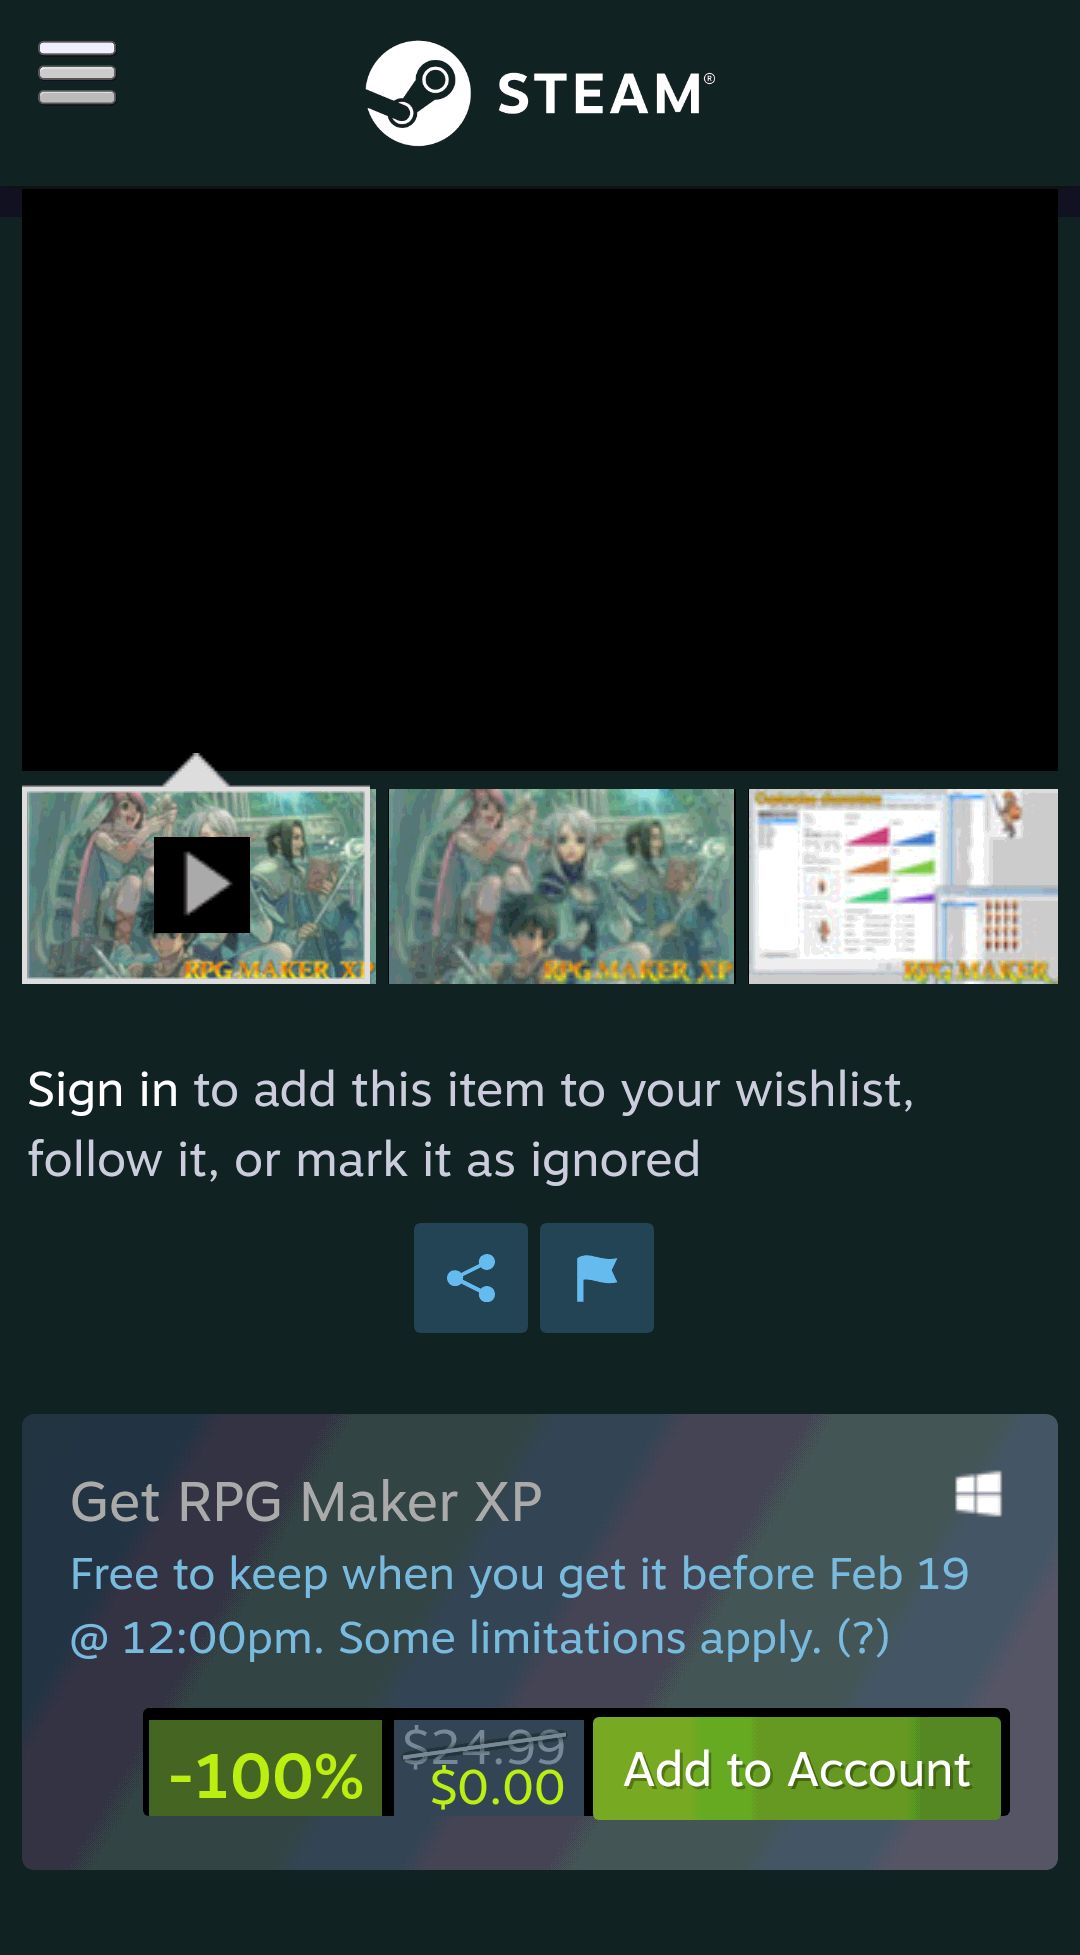 Save 100% on RPG Maker XP on Steam喜加一